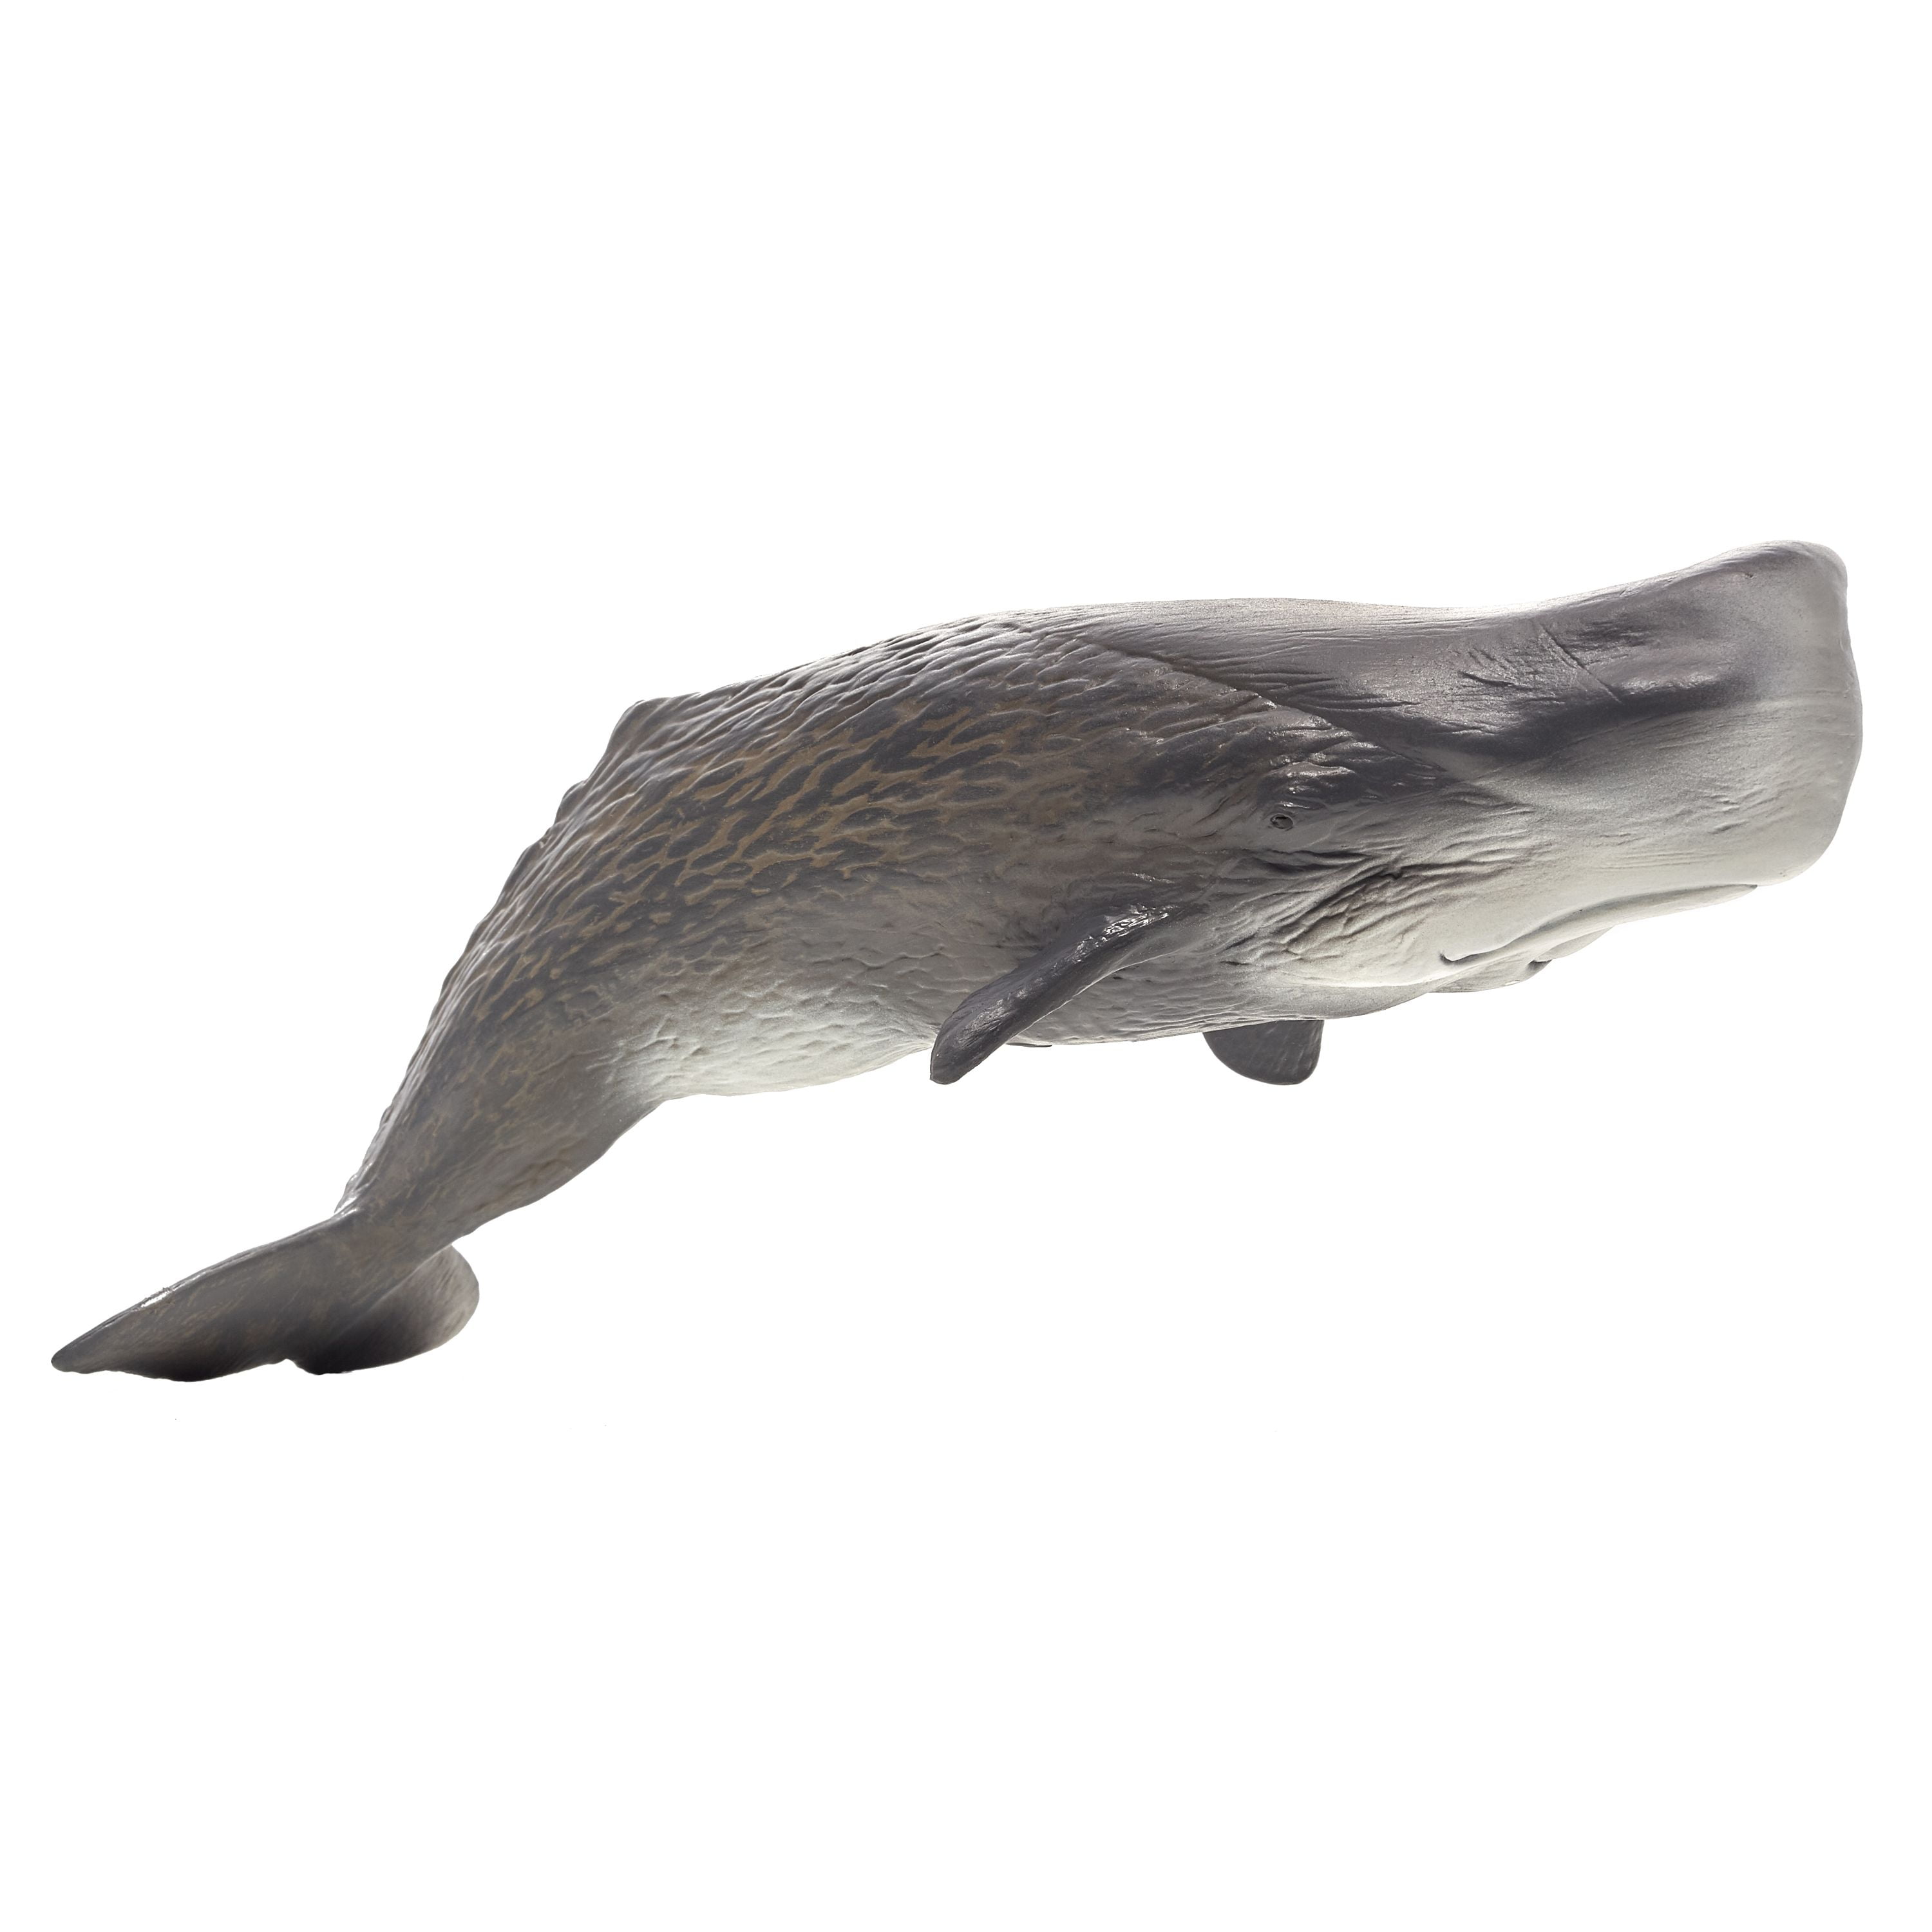 Mojo SPERM WHALE plastic animal sea toy figure model figurine fish bath marine 